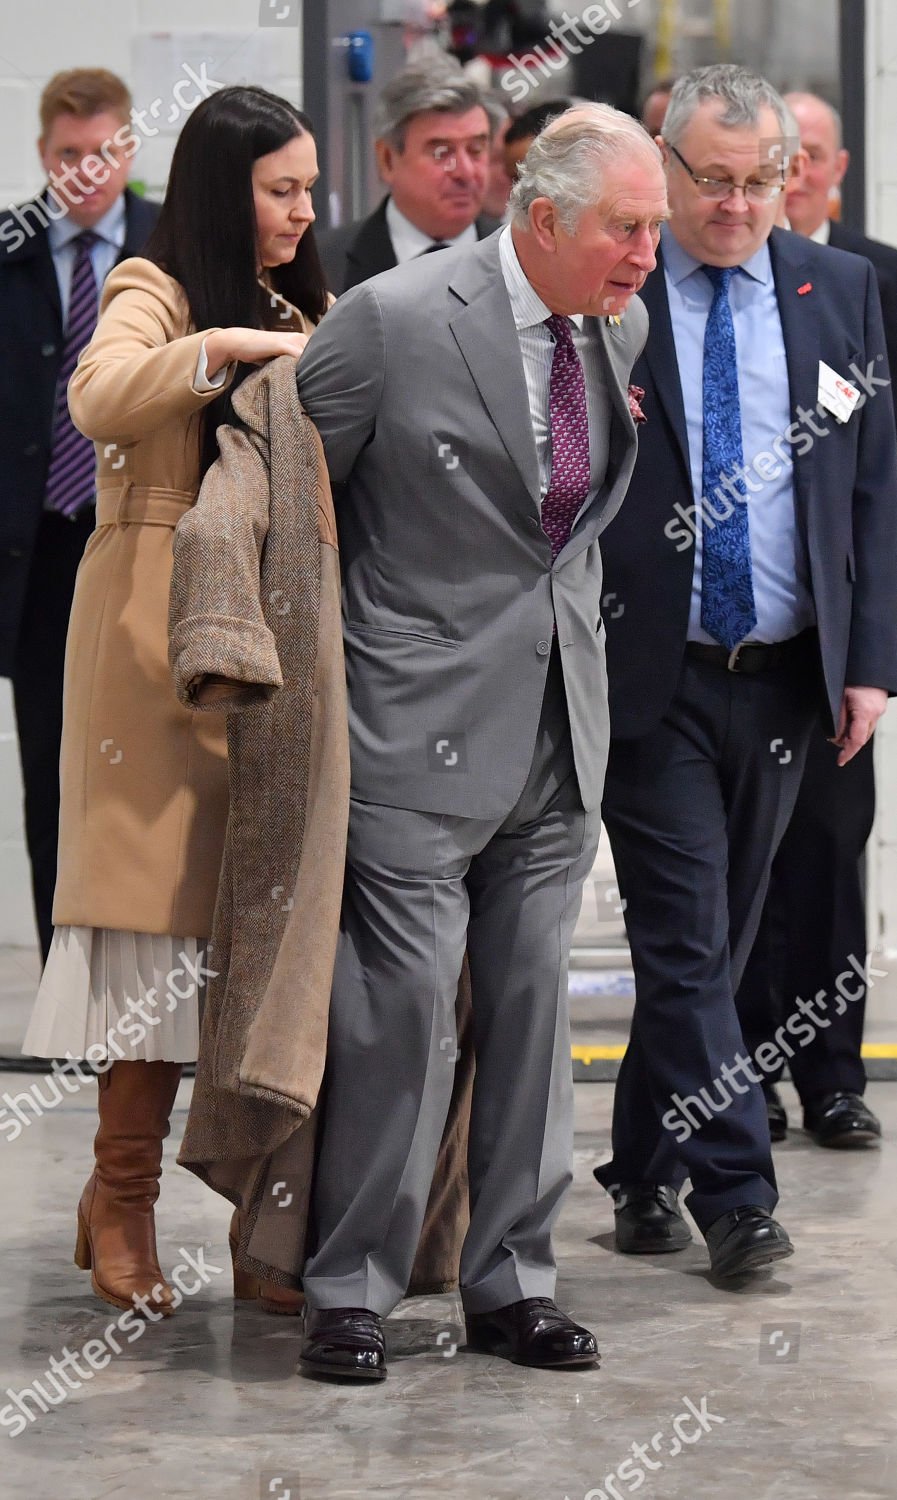 prince-charles-visit-to-south-wales-uk-shutterstock-editorial-10563131u.jpg